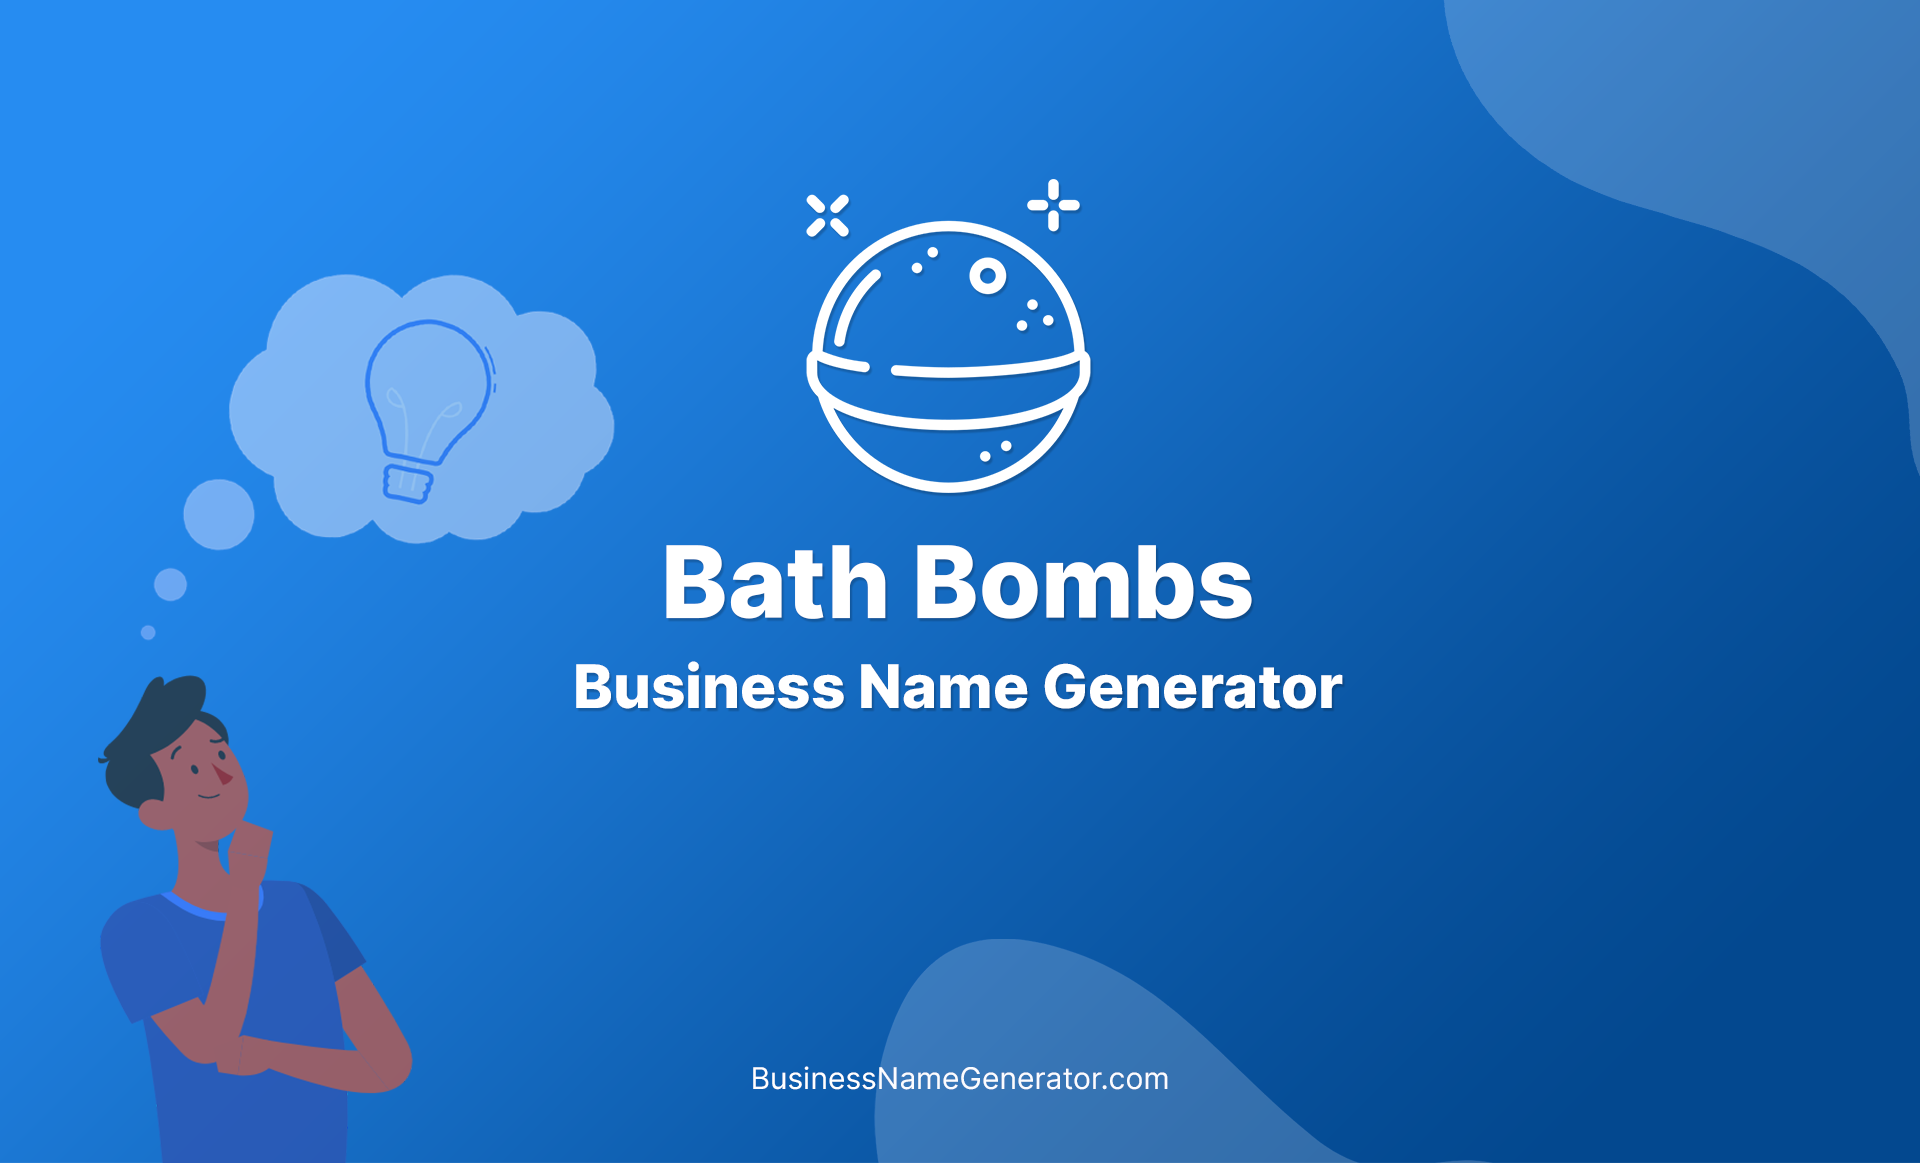 Bath Bombs Business Name Generator